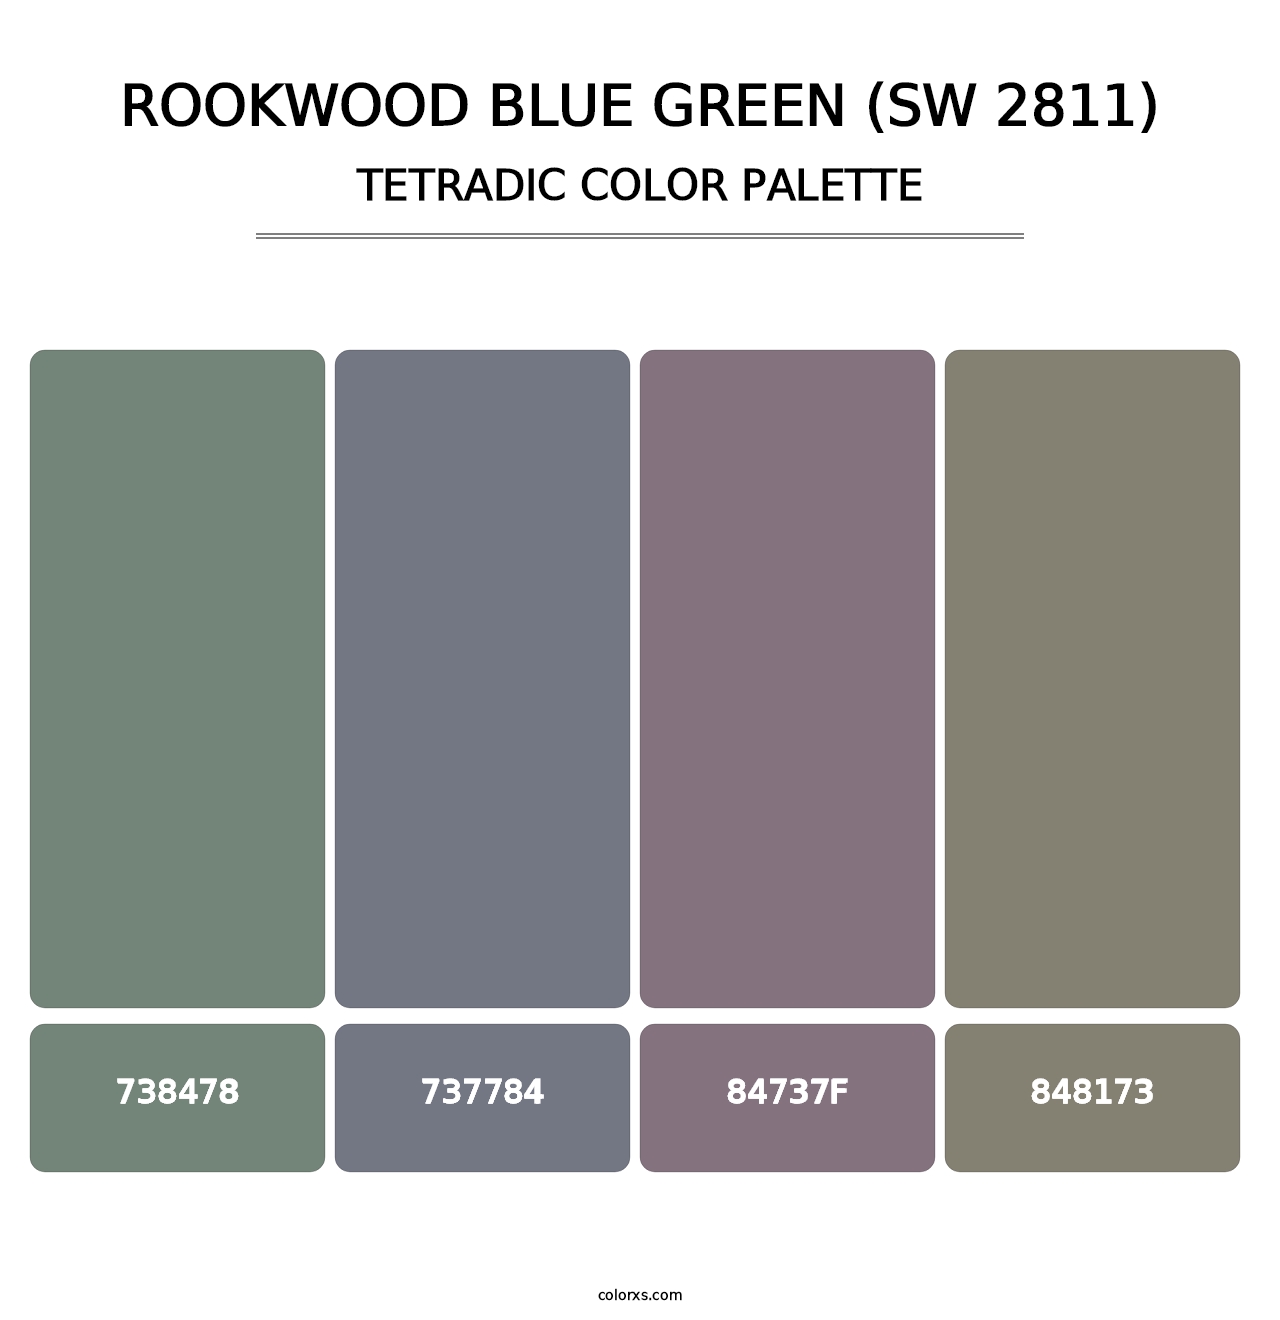 Rookwood Blue Green (SW 2811) - Tetradic Color Palette